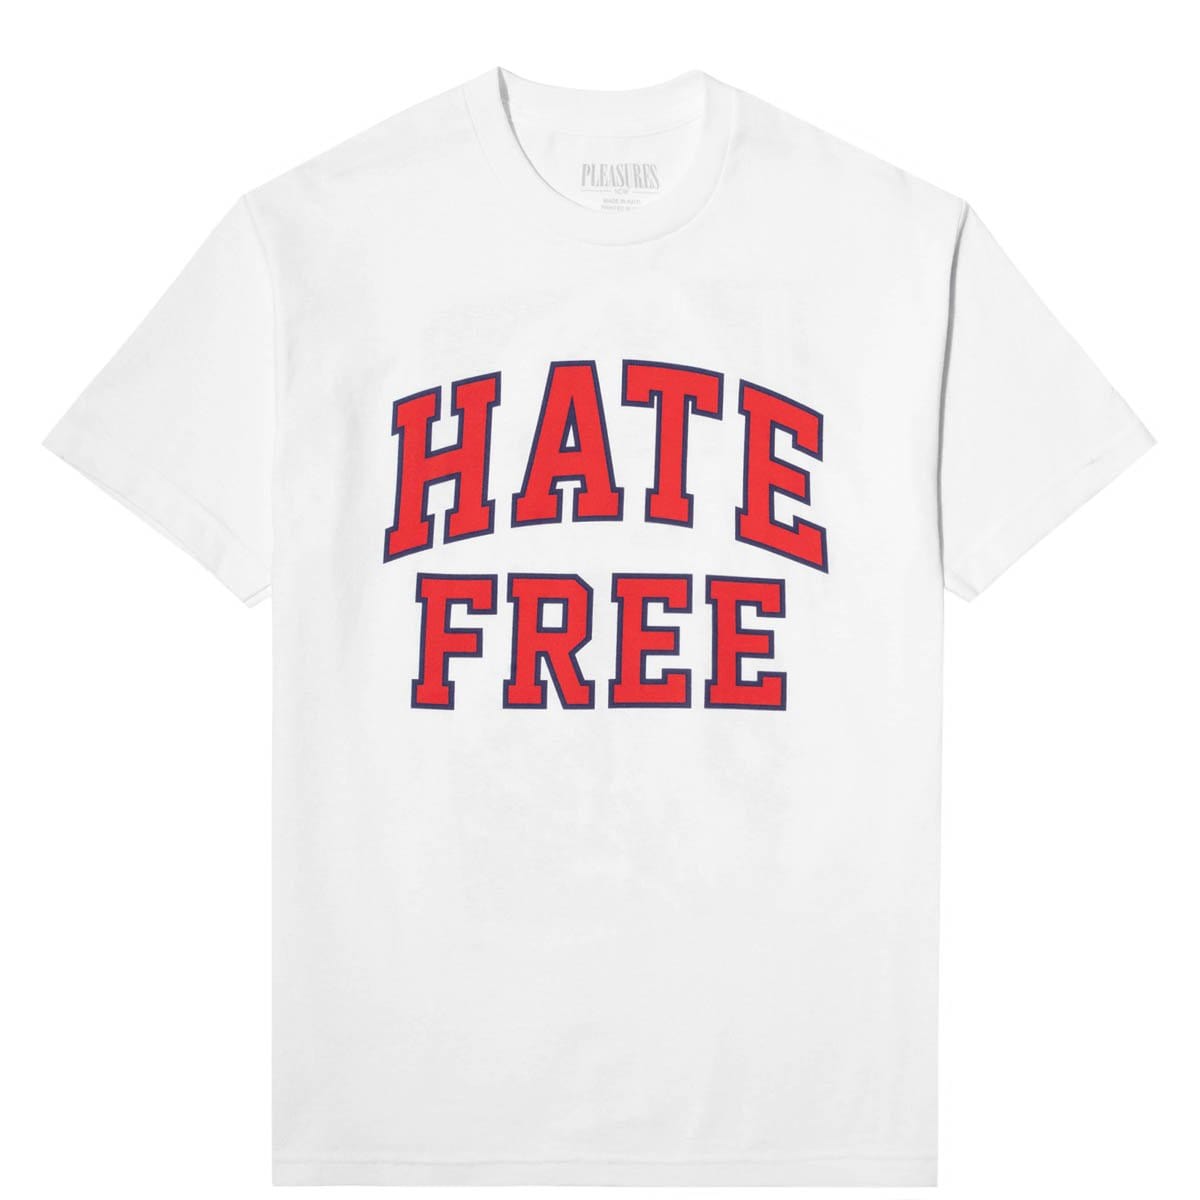 Pleasures T-Shirts HATE FREE T-SHIRT